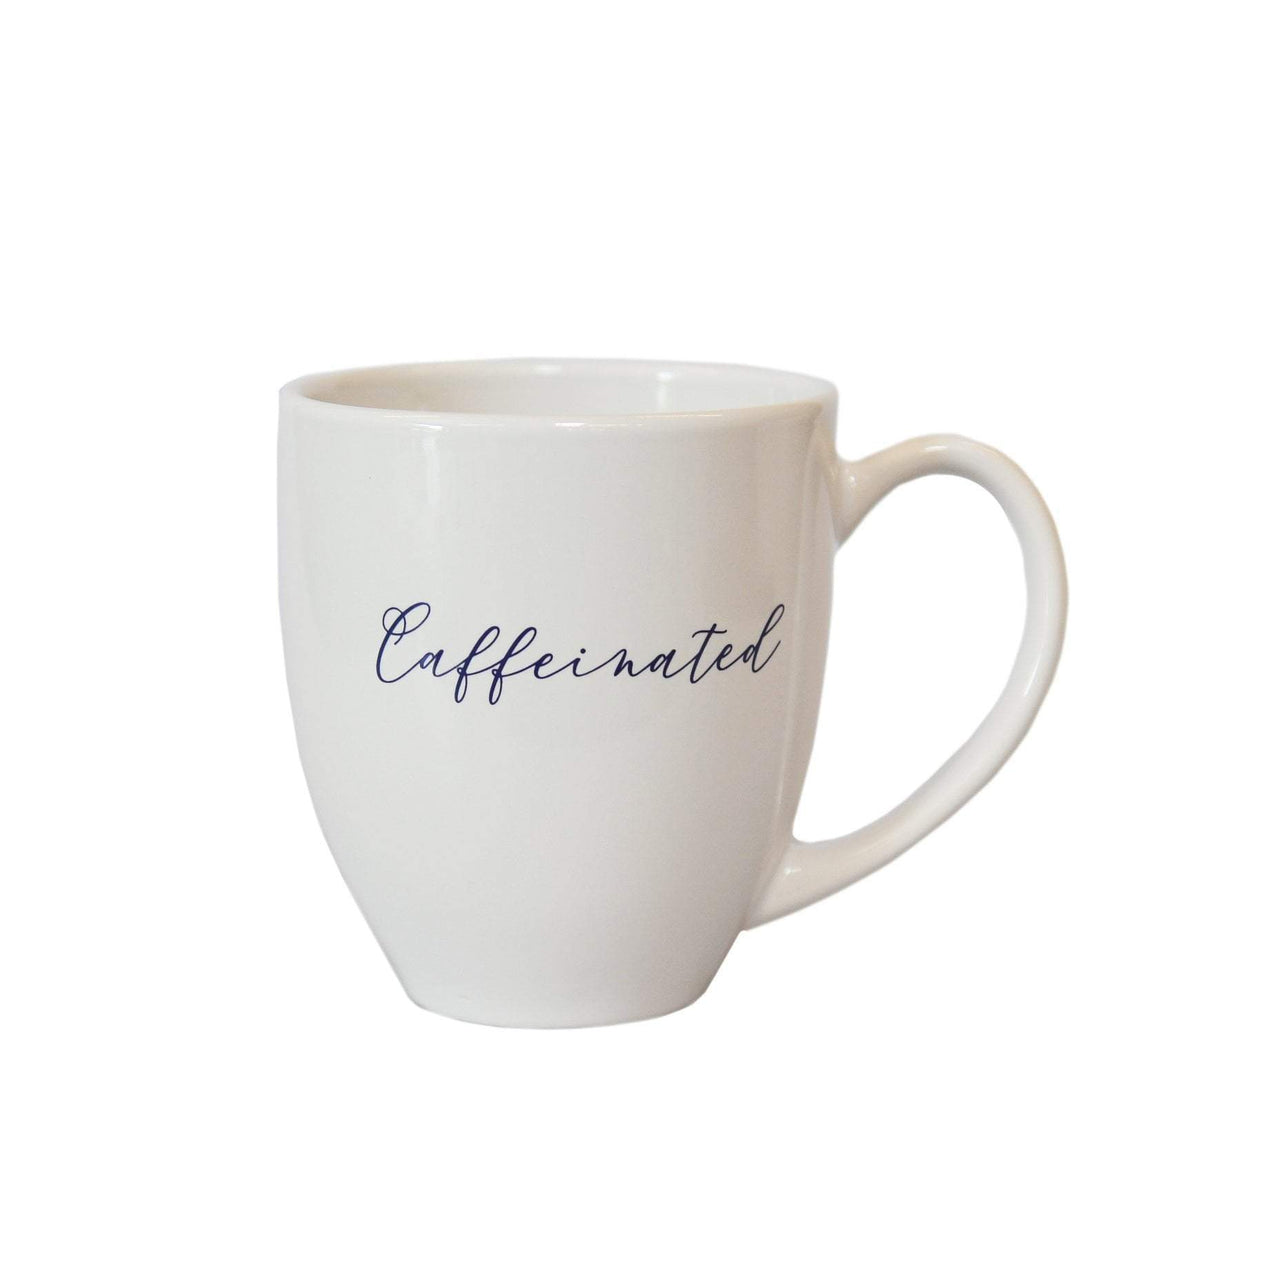 Caffeine and Kilos Inc Accessories Caffeinated Mug